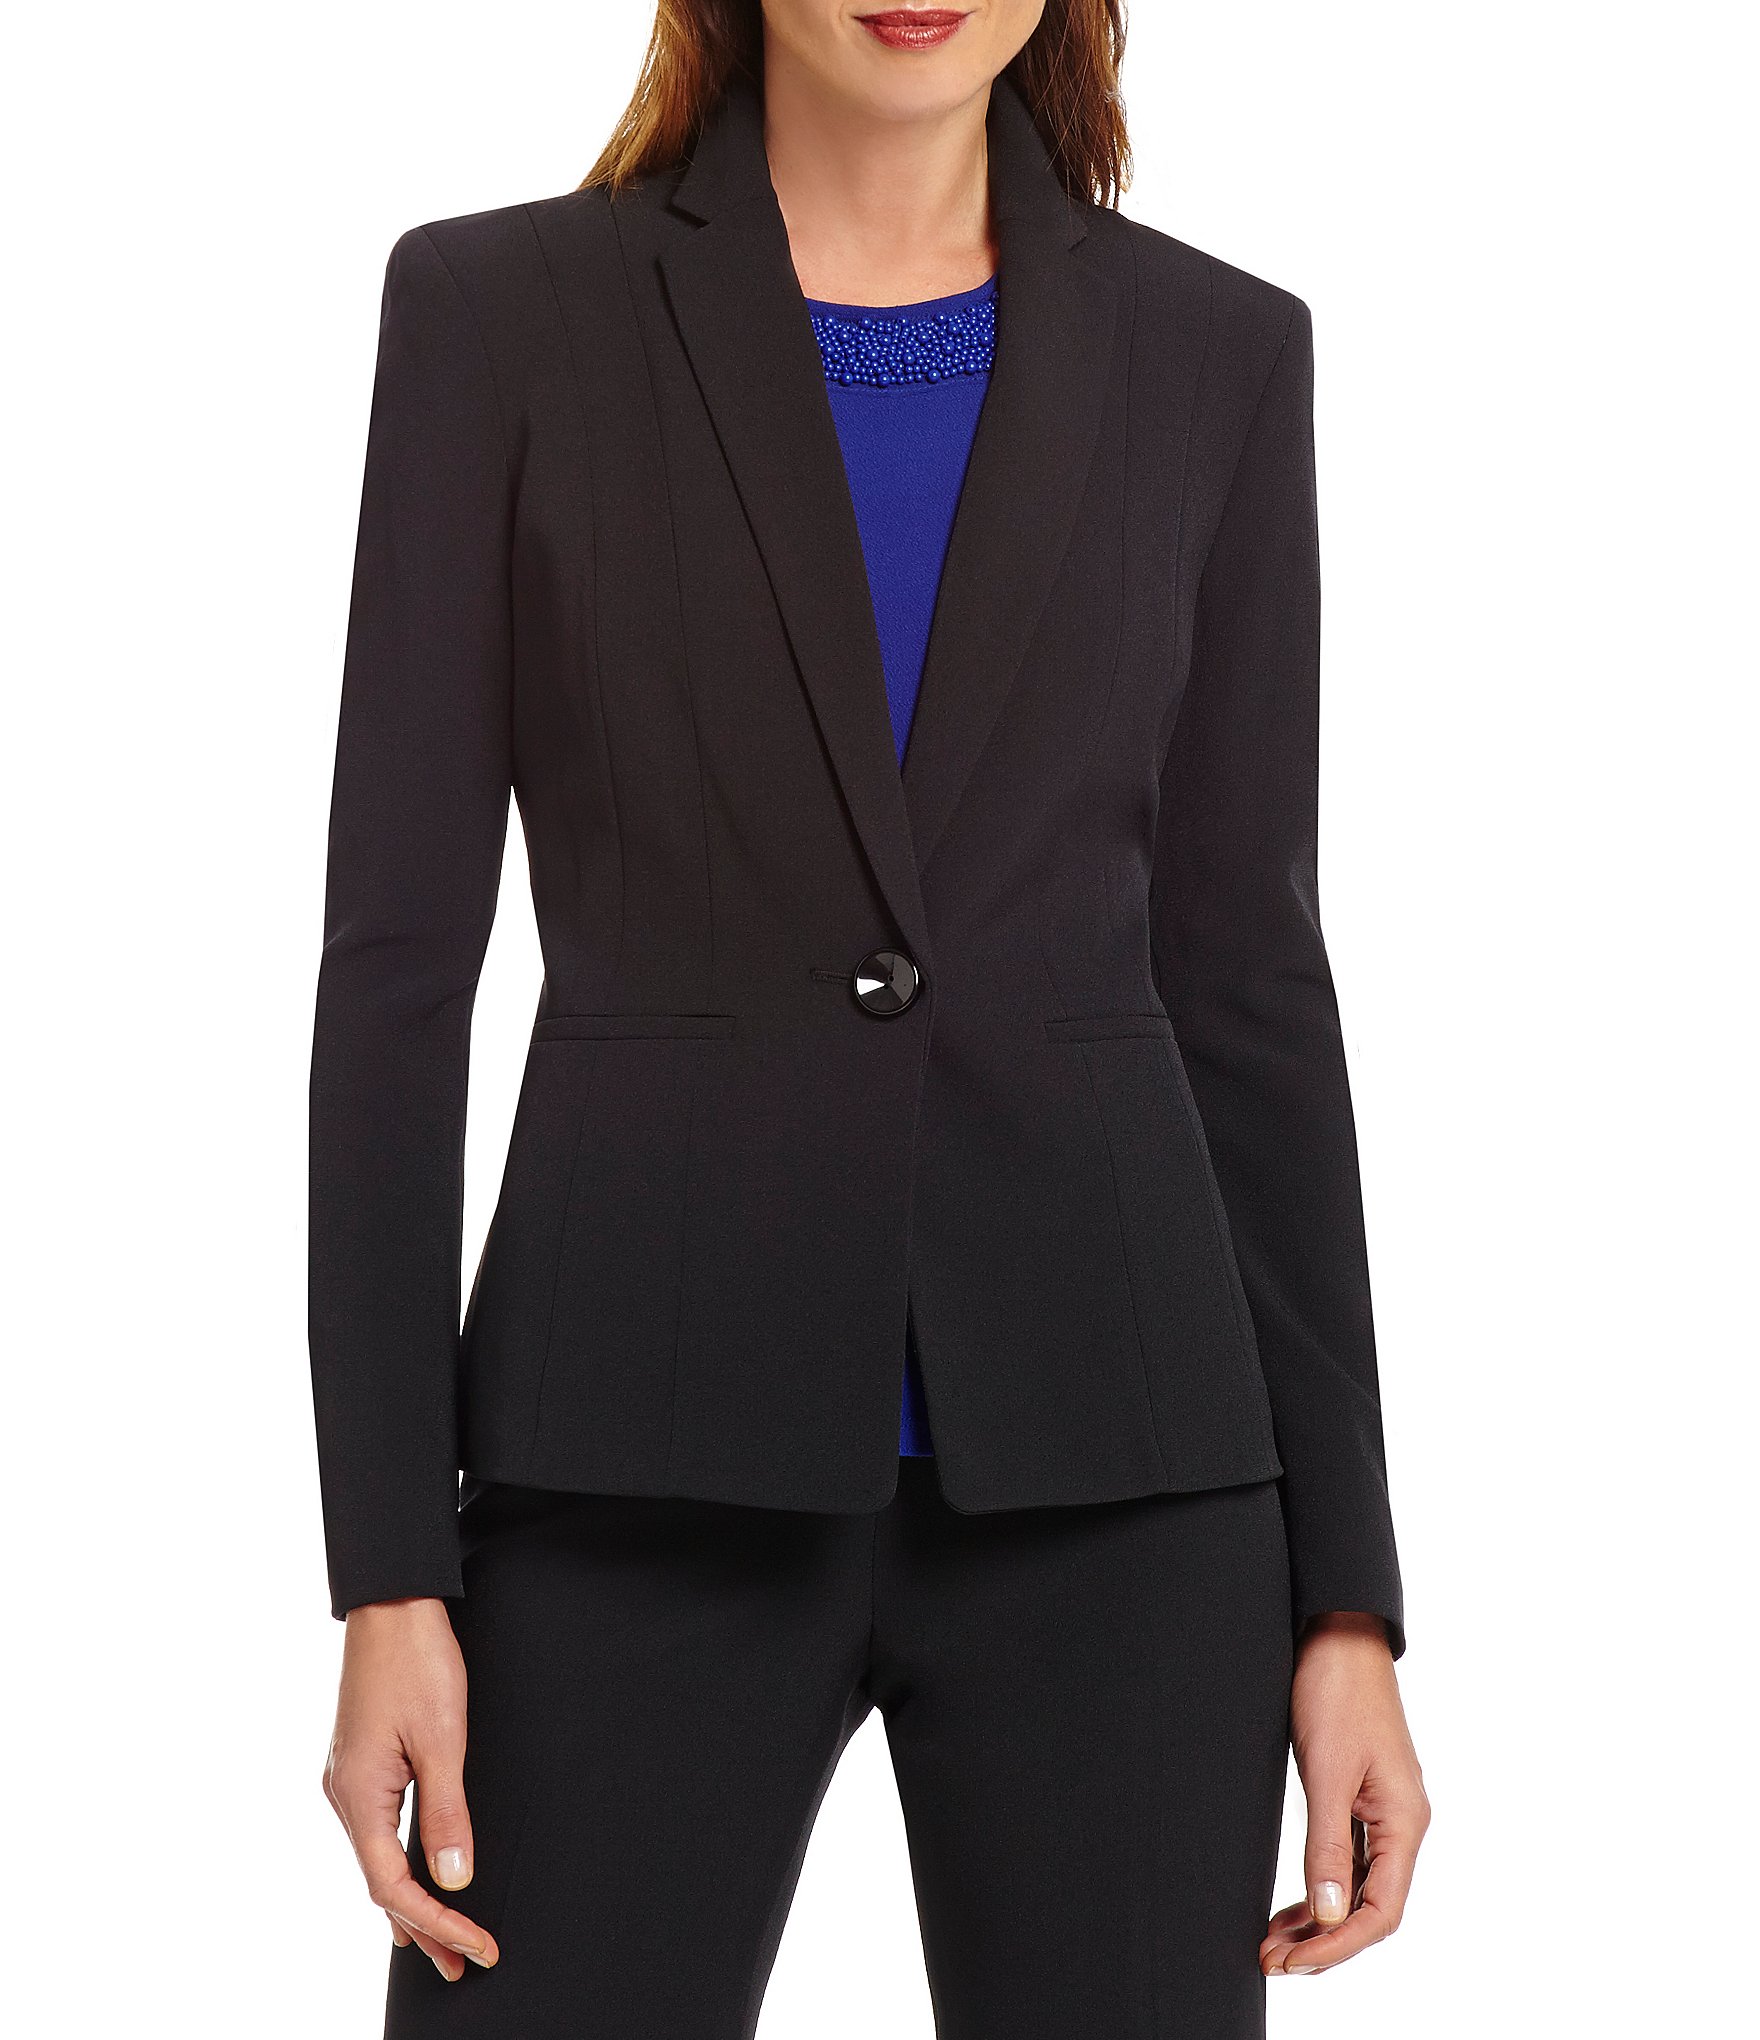 KASPER PETITE Black & White Blazer Jacket Size 16P - $38 - From